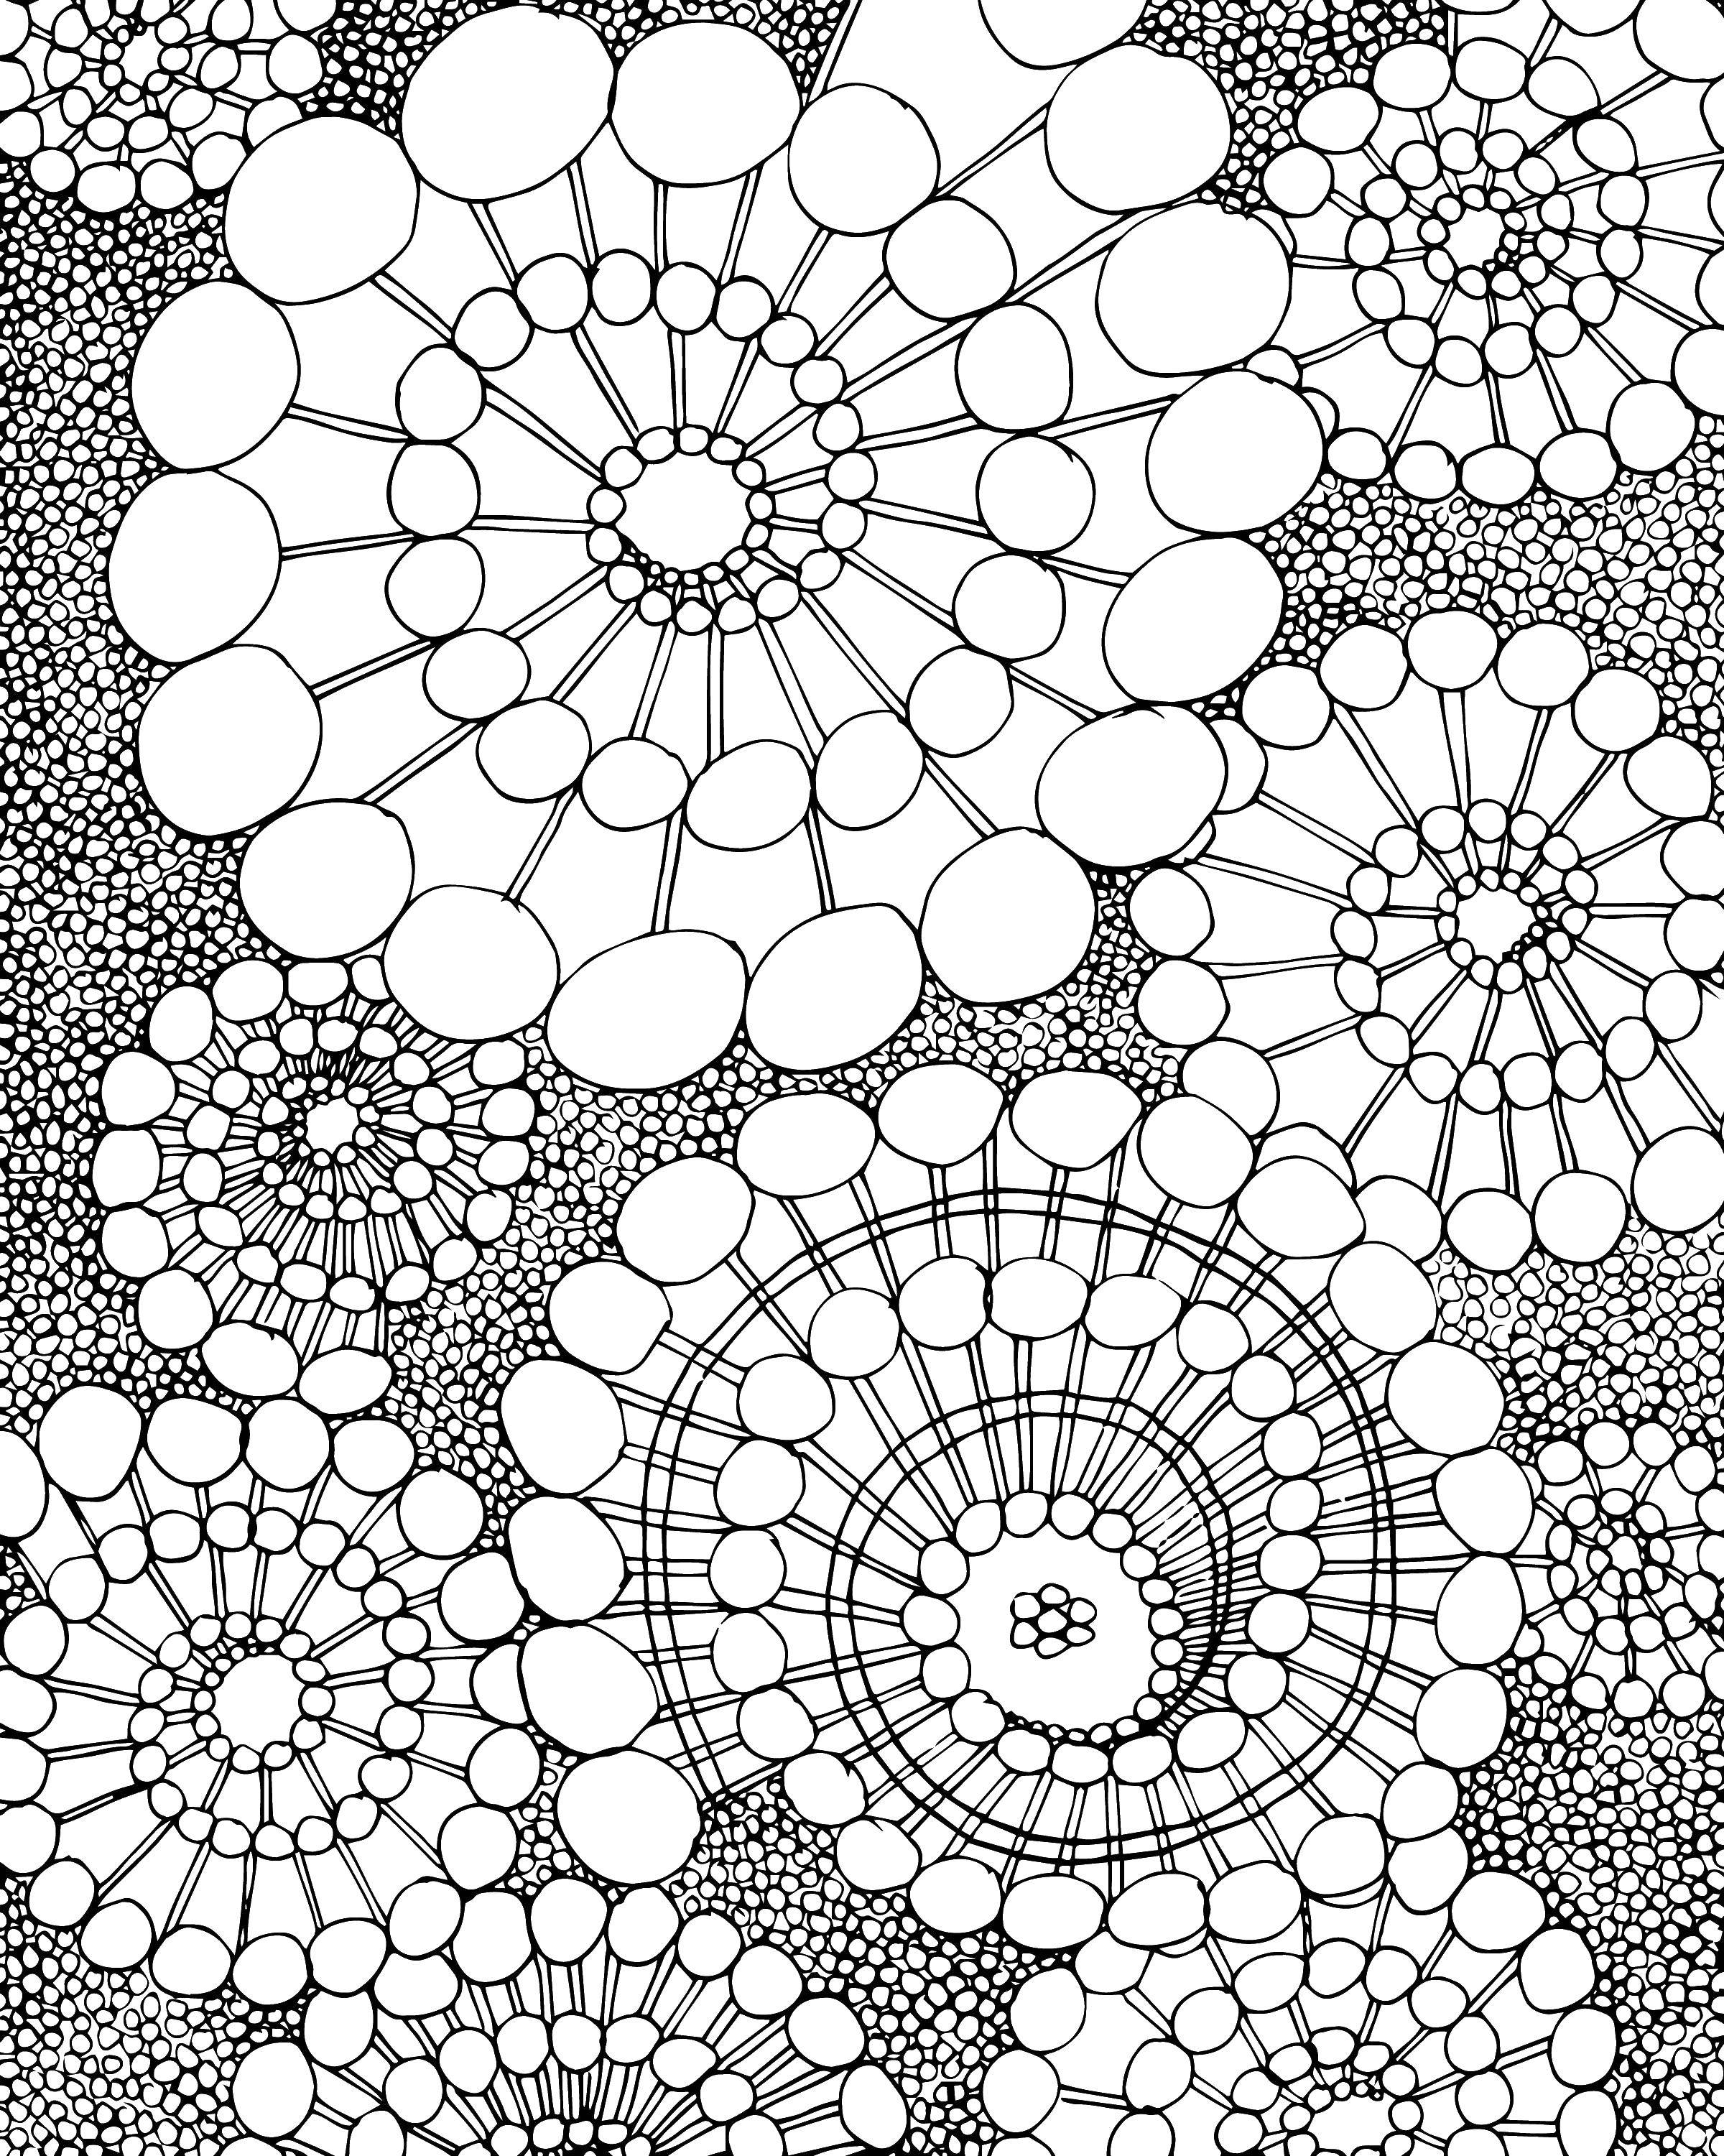 Coloring Kaleidoscope. Category Kaleidoscope. Tags:  Kaleidoscope.